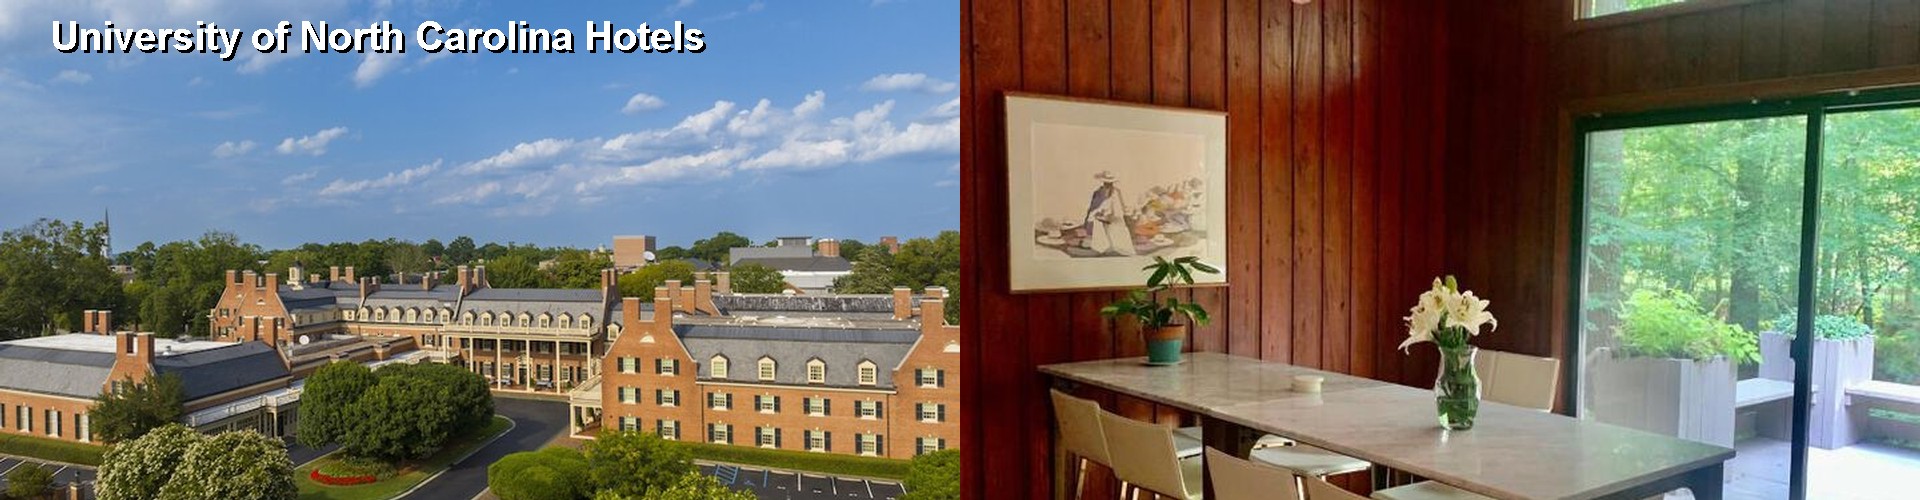 5 Best Hotels near University of North Carolina